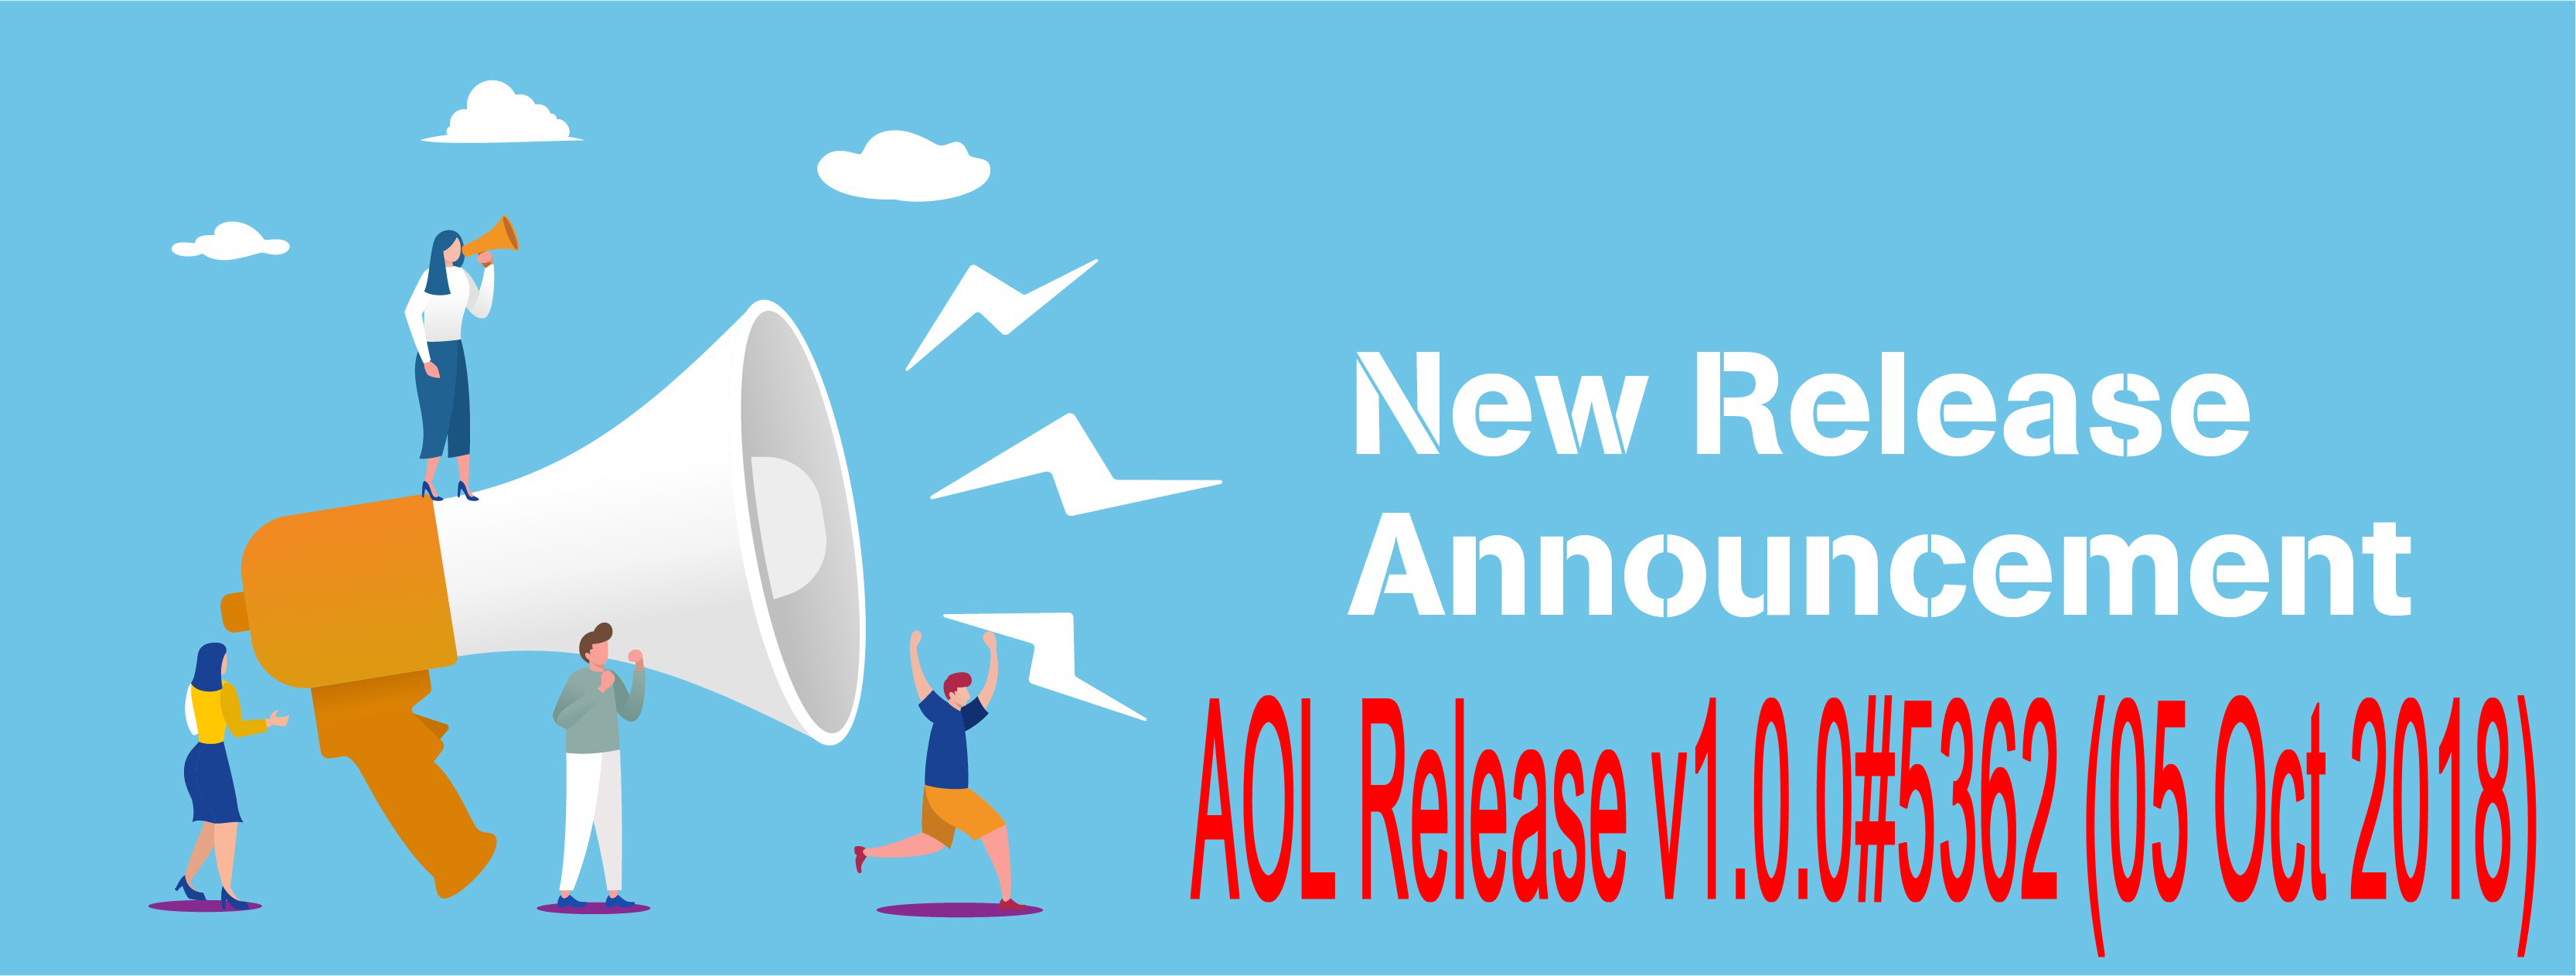 Release v1.0.0#5362 (05 Oct 2018)